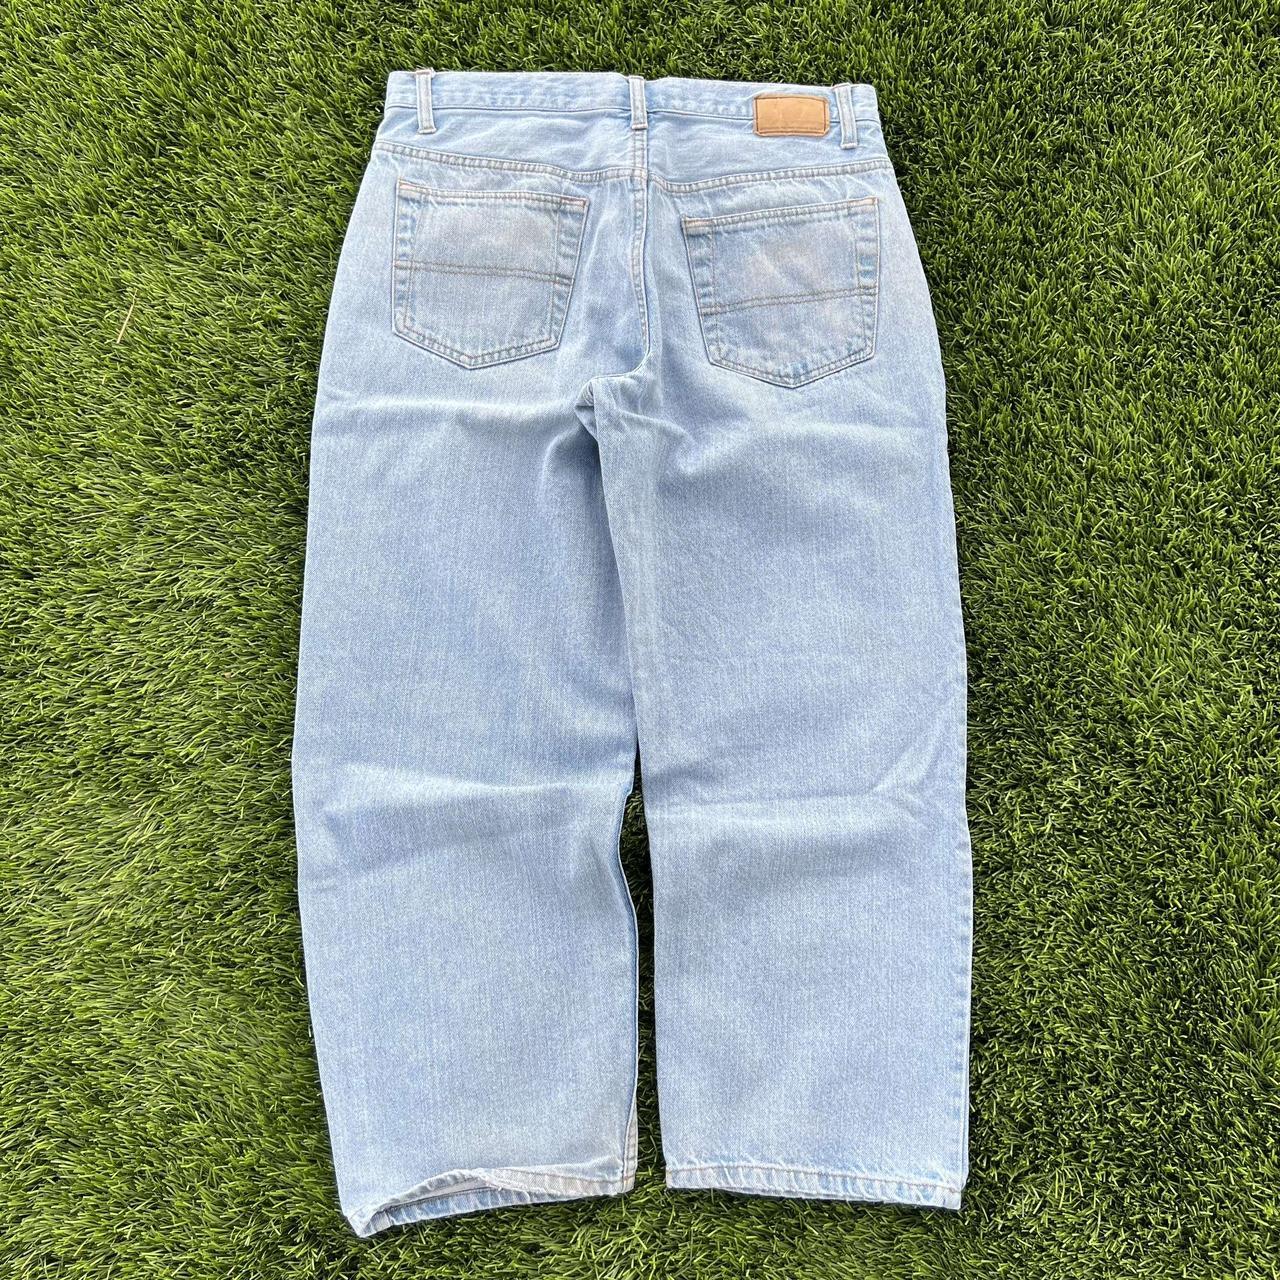 Hella Baggy Urban Jeans Size: 34x30 Excellent... - Depop